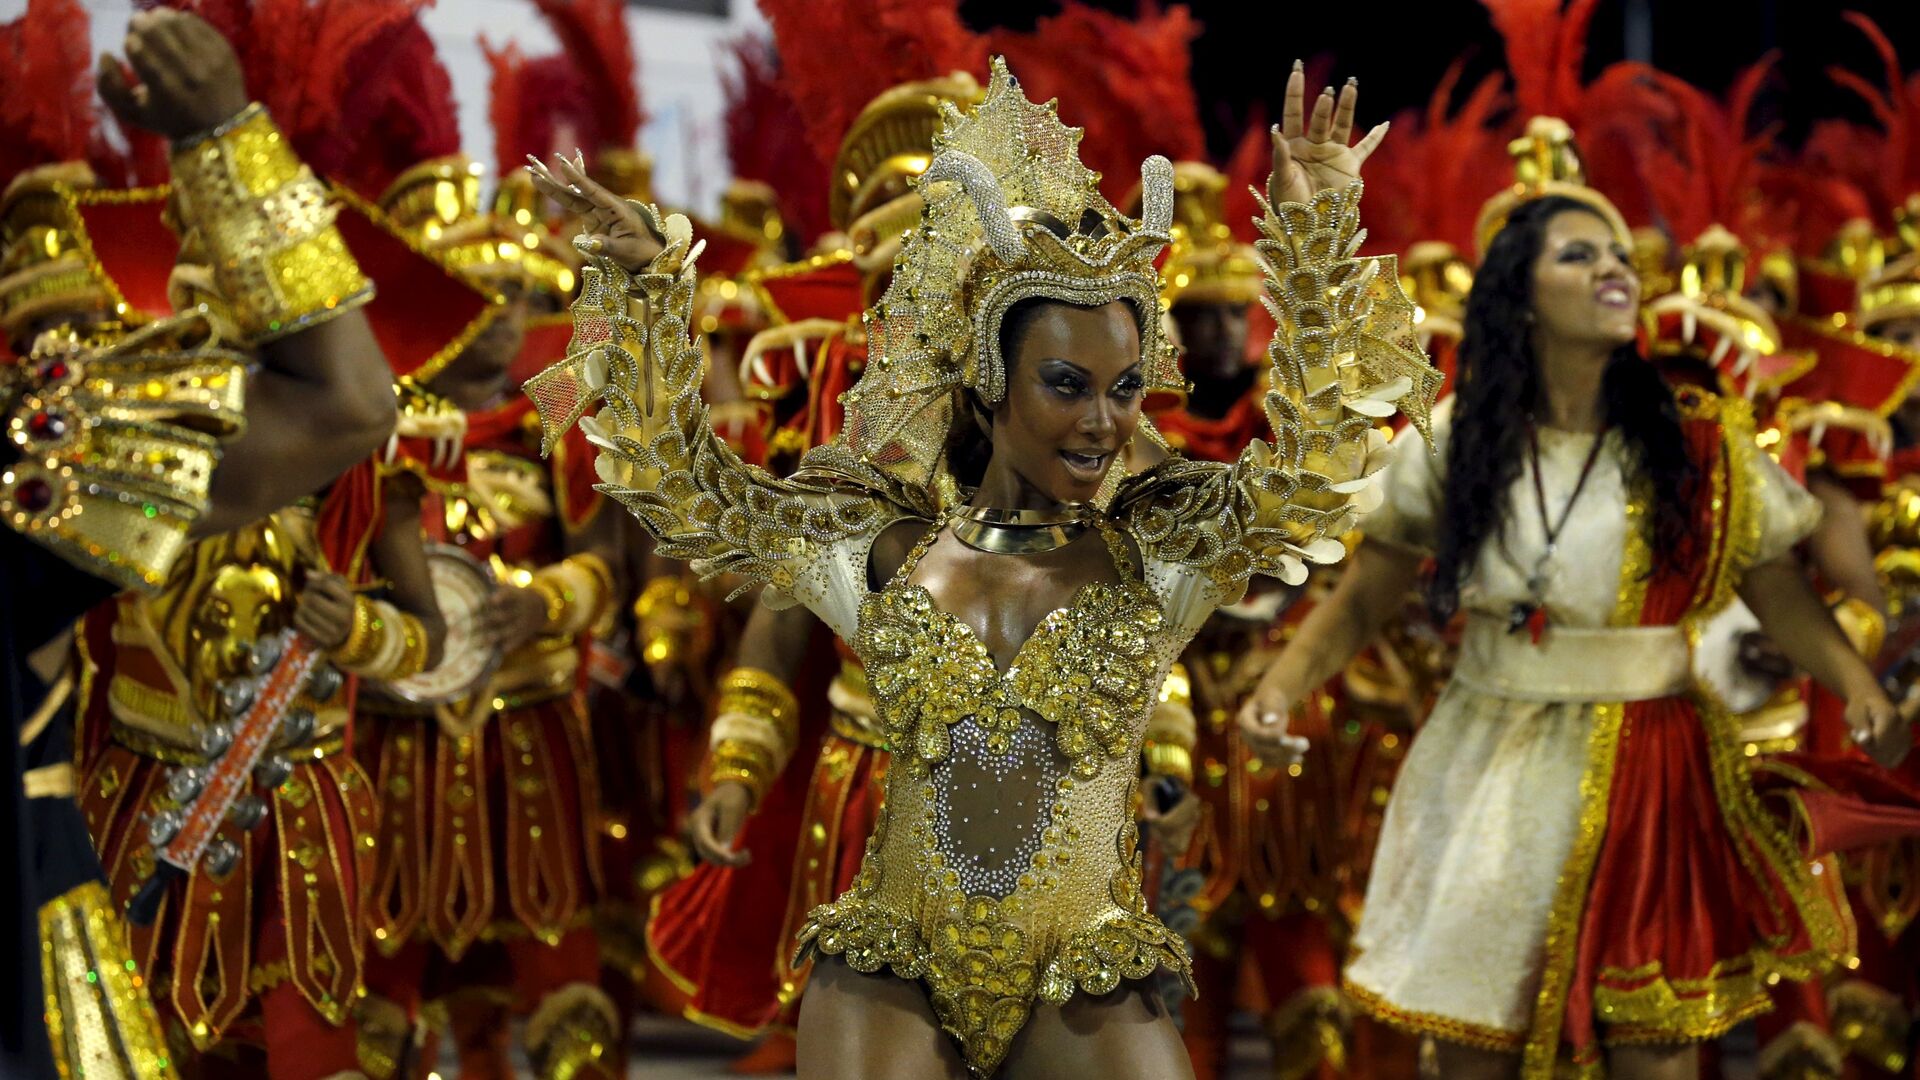 Estacio de Sa samba schooll's Drum Queen Luana Bandeira performs during the carnaval parade at the Sambadrome in Rio de Janeiro's Sambadrome February 7, 2016. - Sputnik Mundo, 1920, 03.12.2021